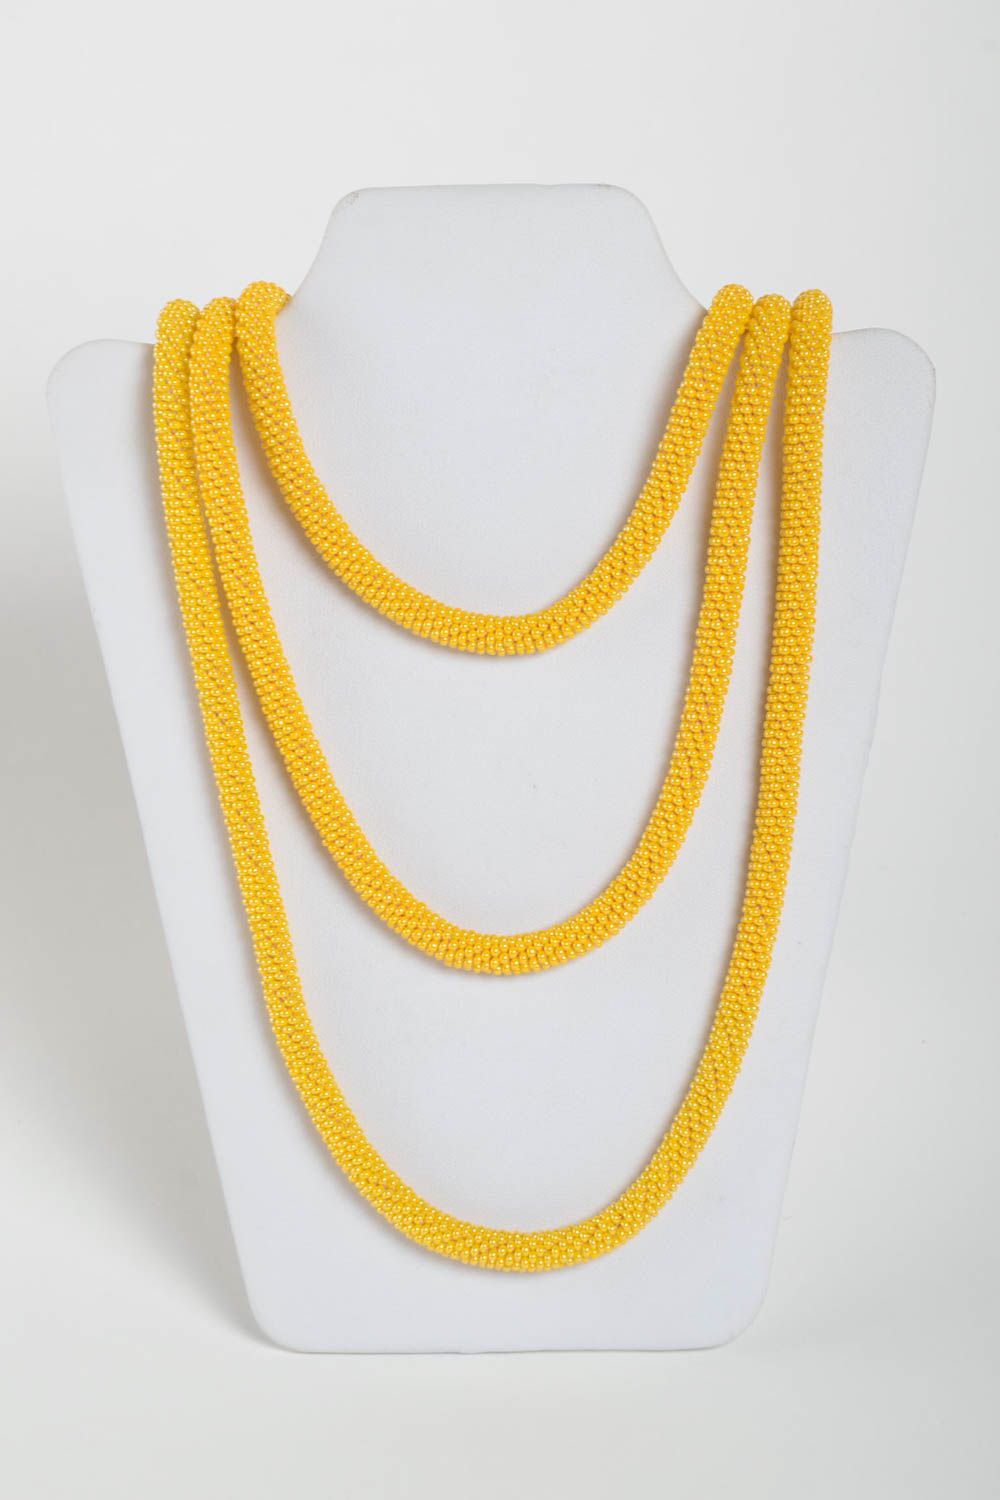 Stylish handmade cord necklace long yellow jewelry handmade designer accessories photo 2